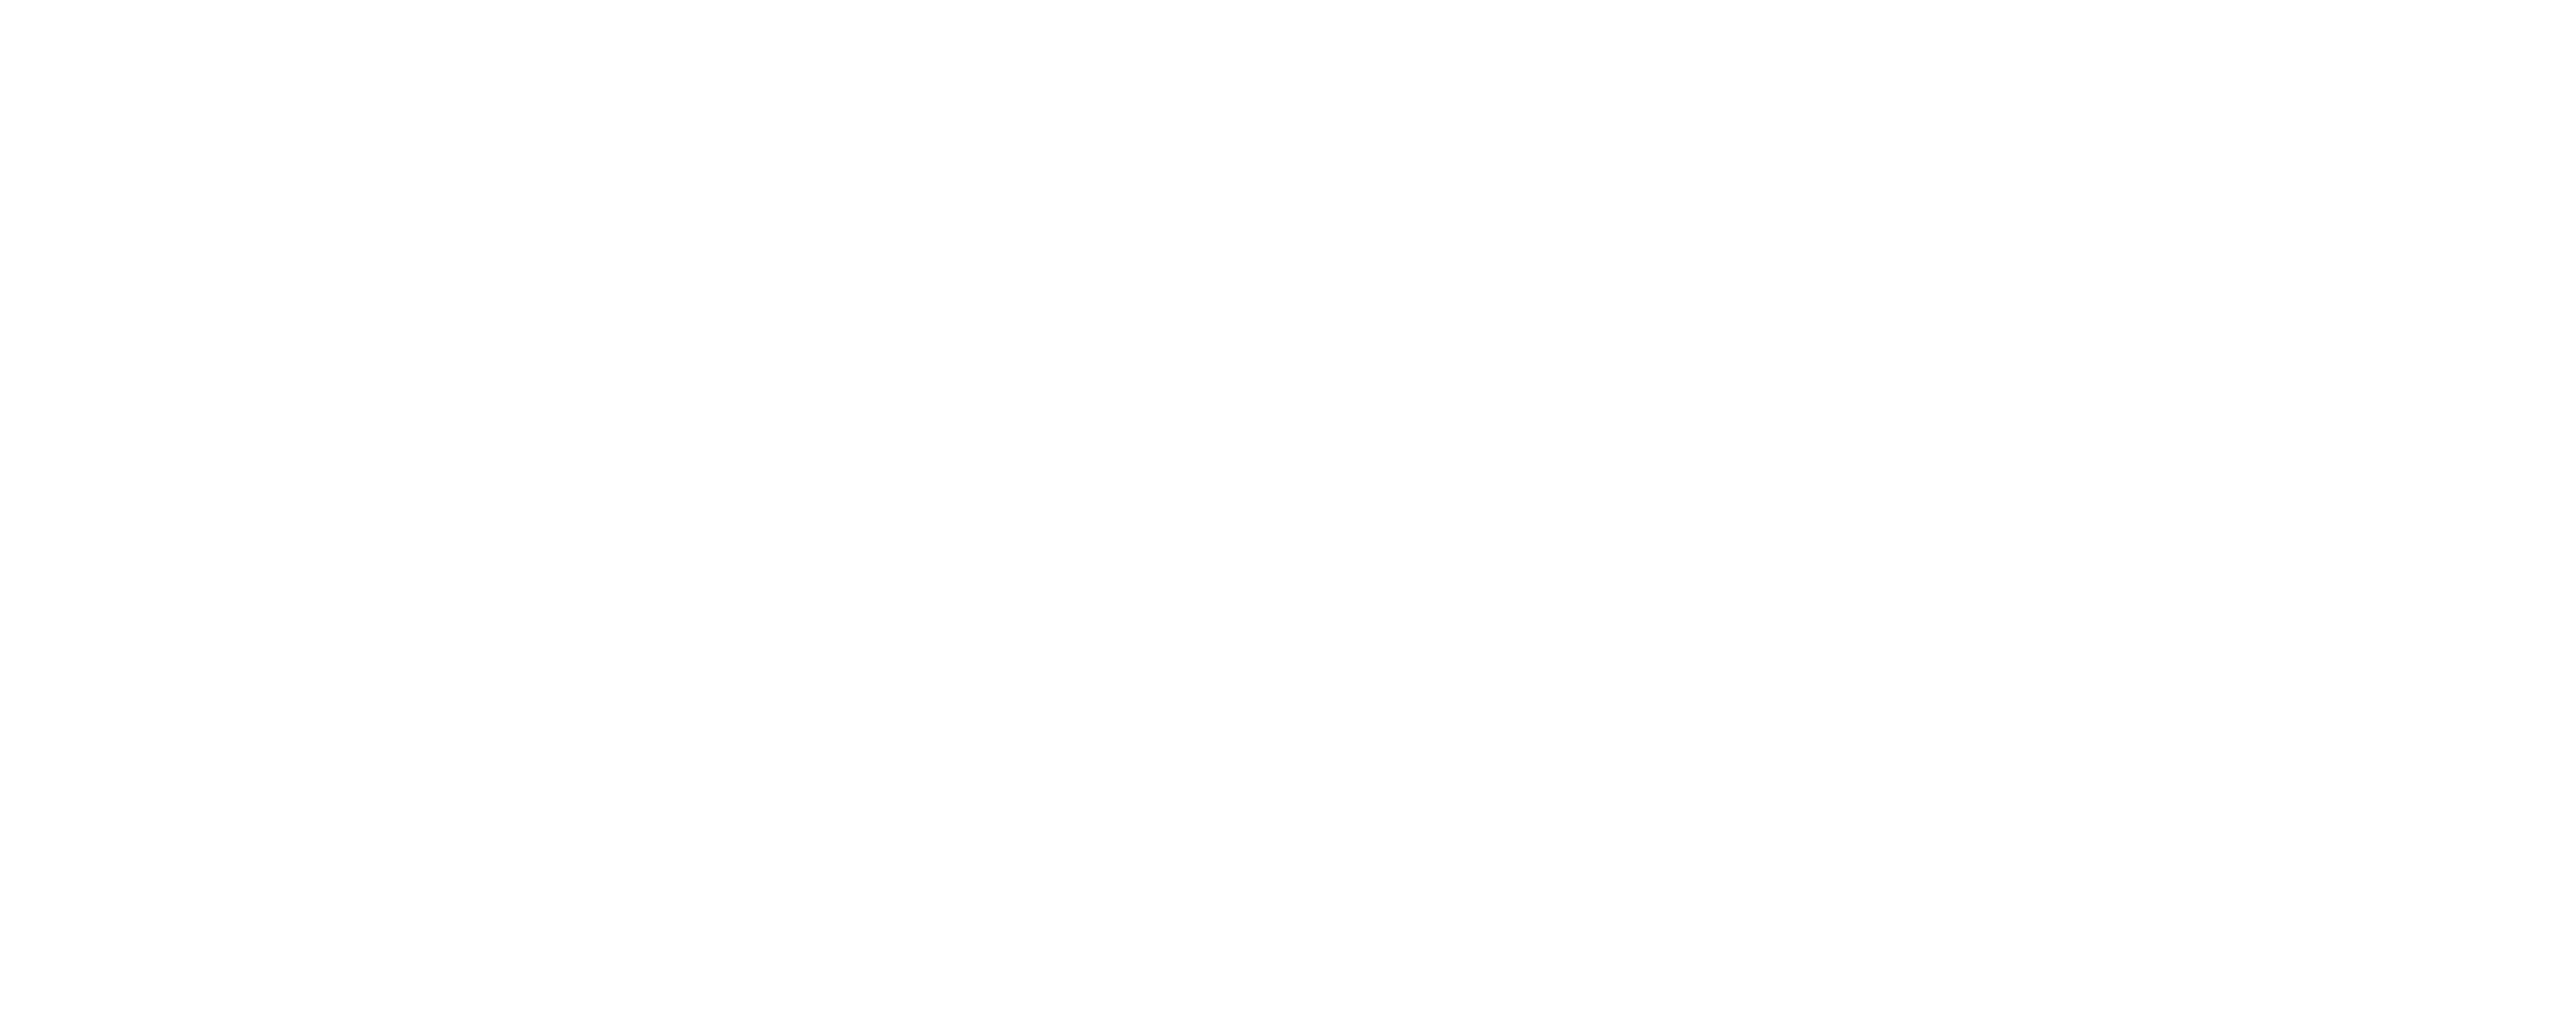 splunk logo white